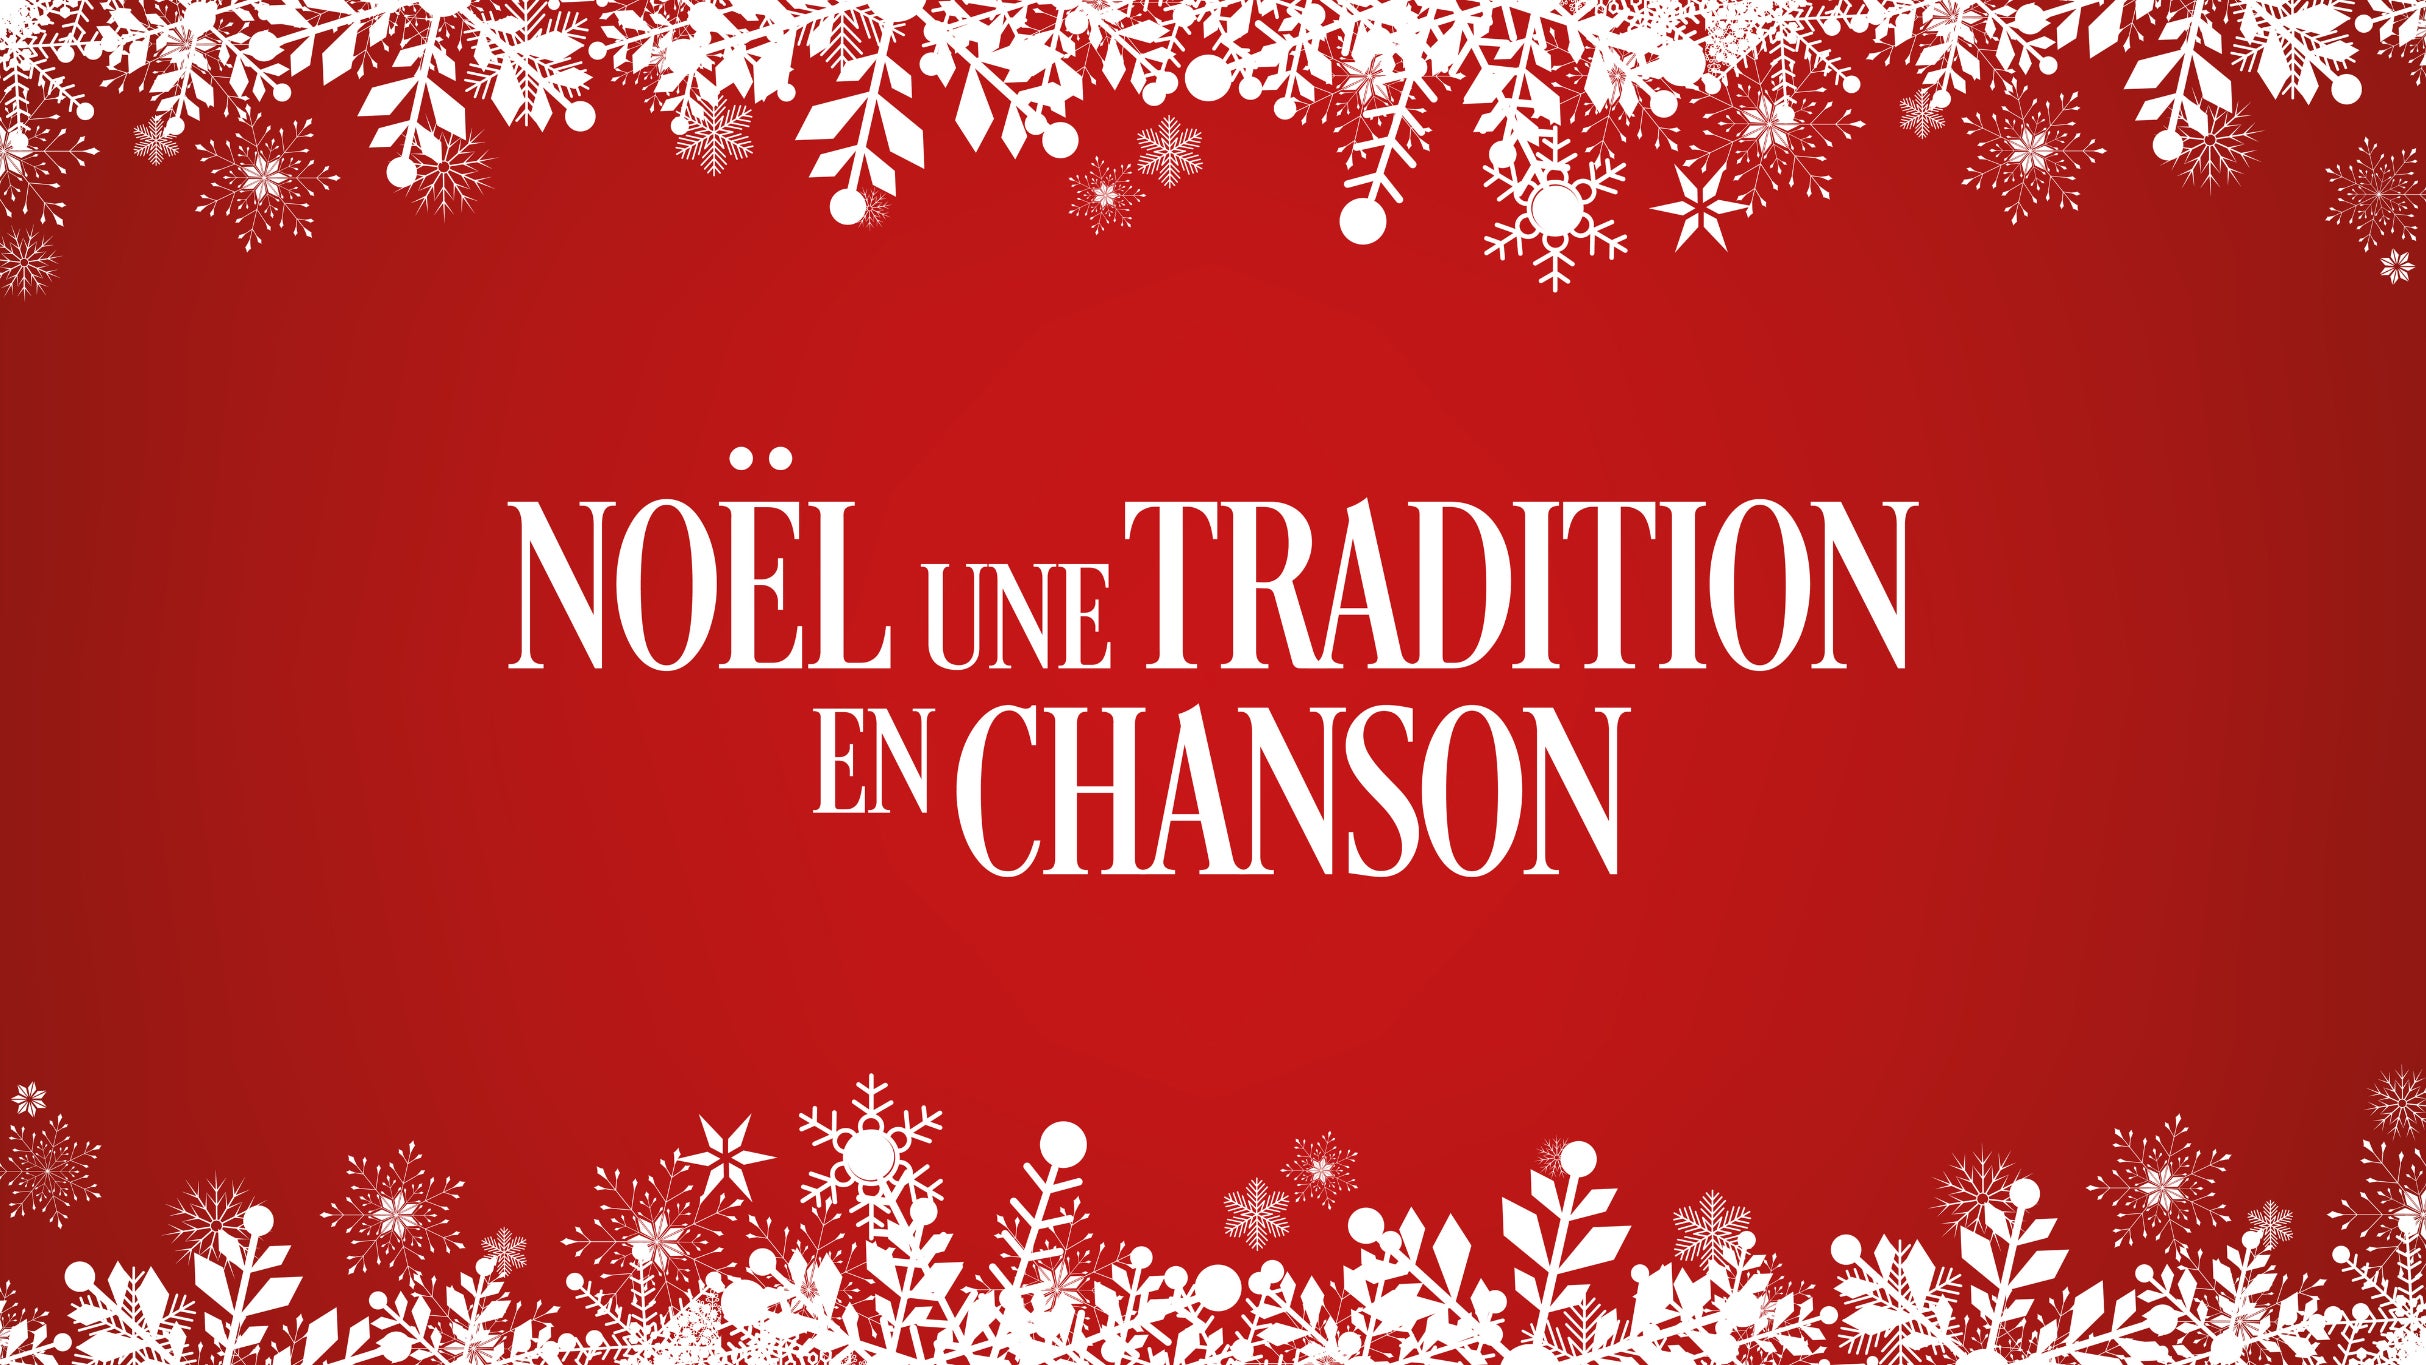 Noël, Une Tradition En Chanson in Montreal promo photo for Prévente presale offer code